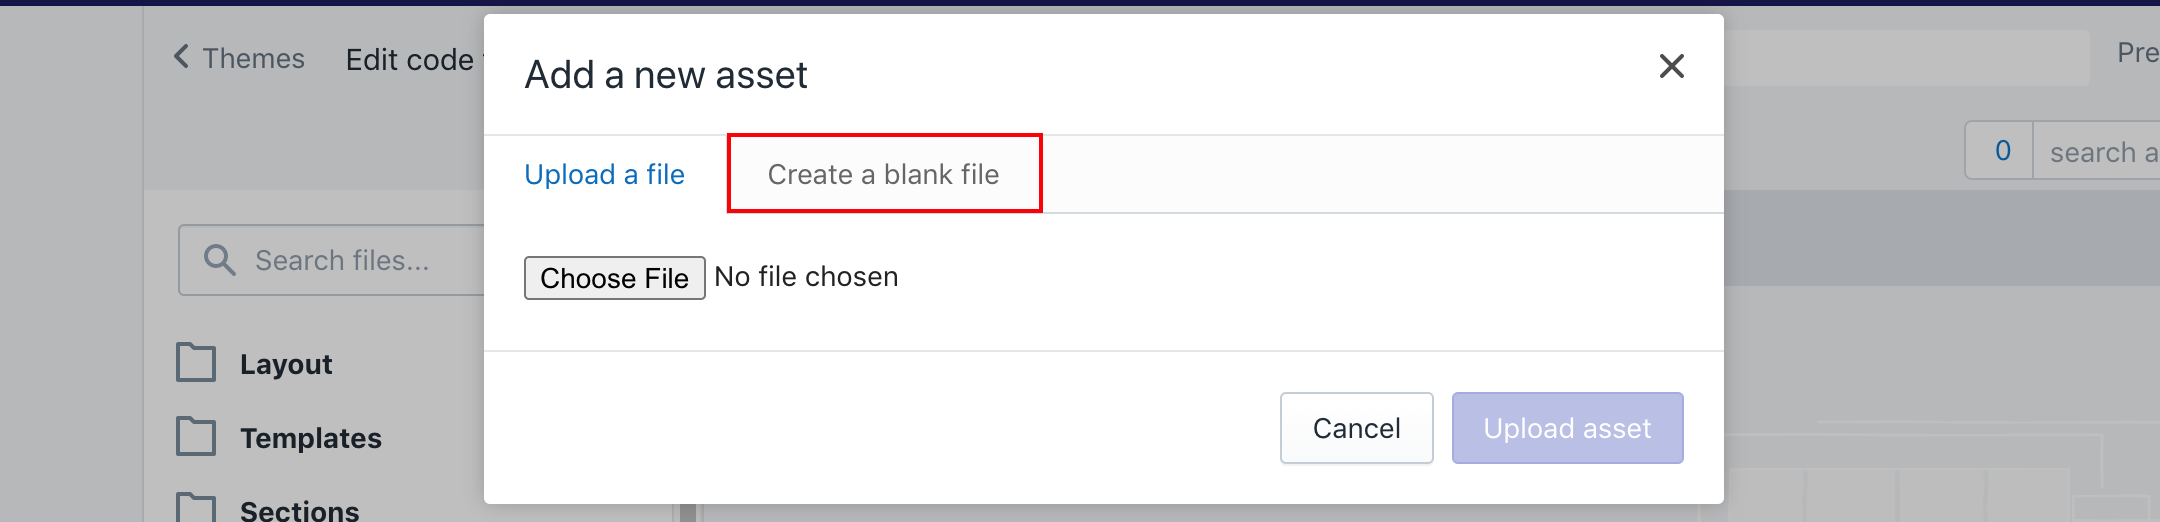 Create a blank file